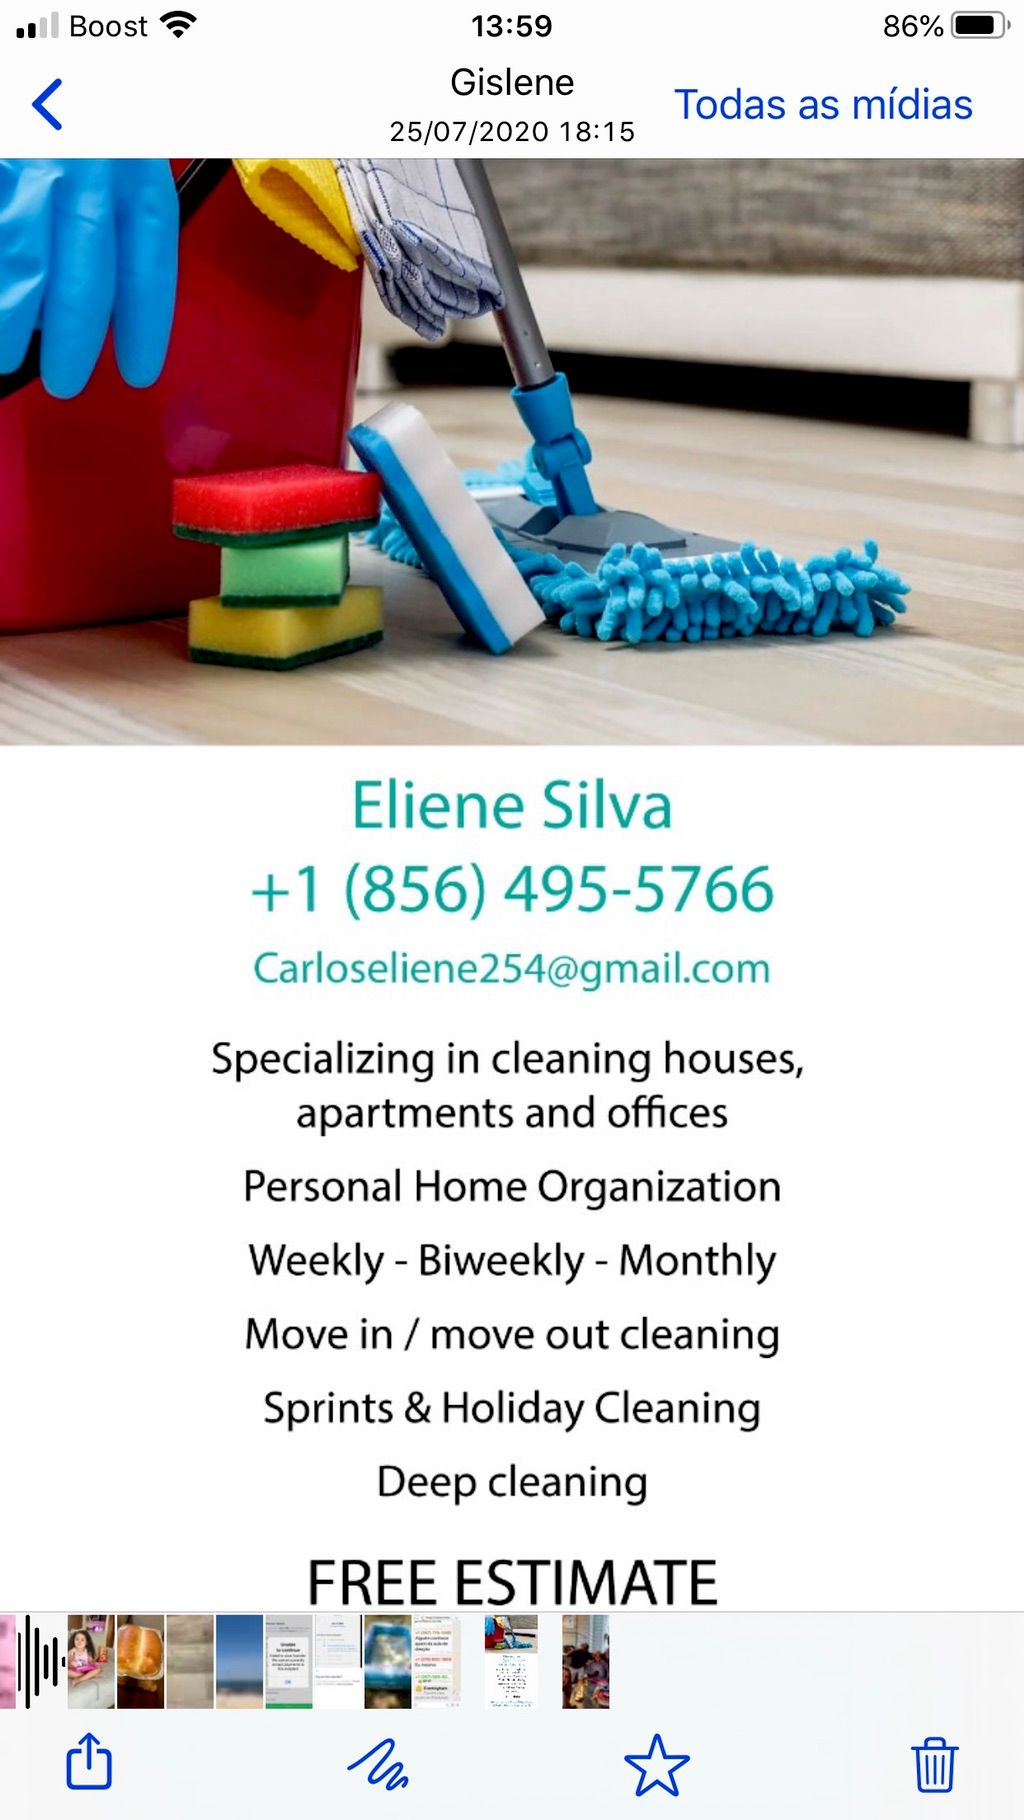 Eliene silva cleaning service